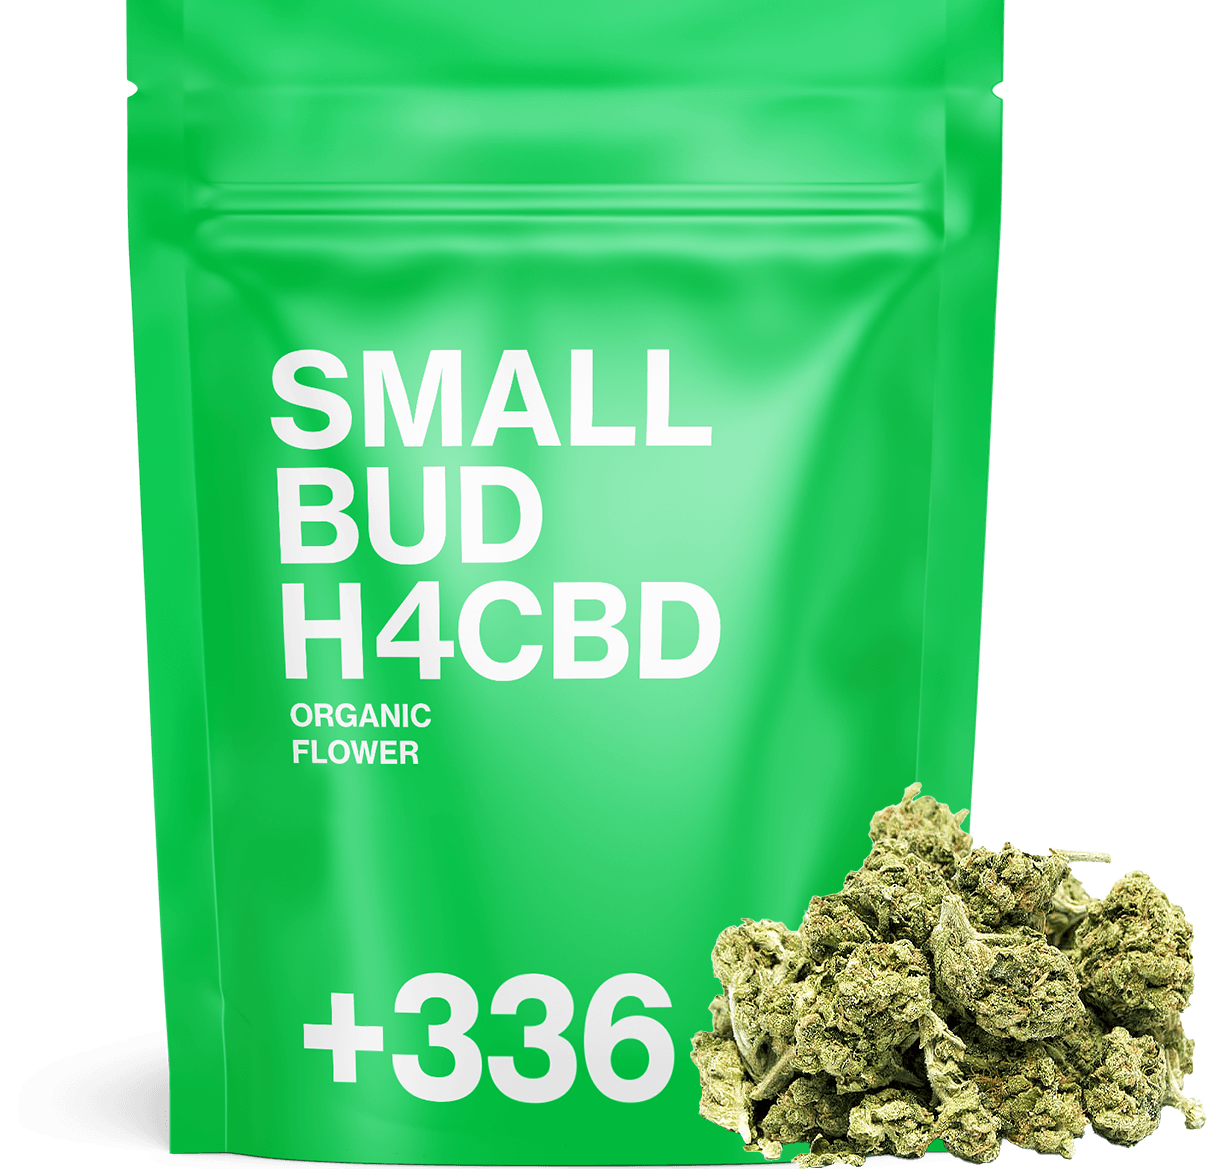 Small Bud H4CBD 🌳